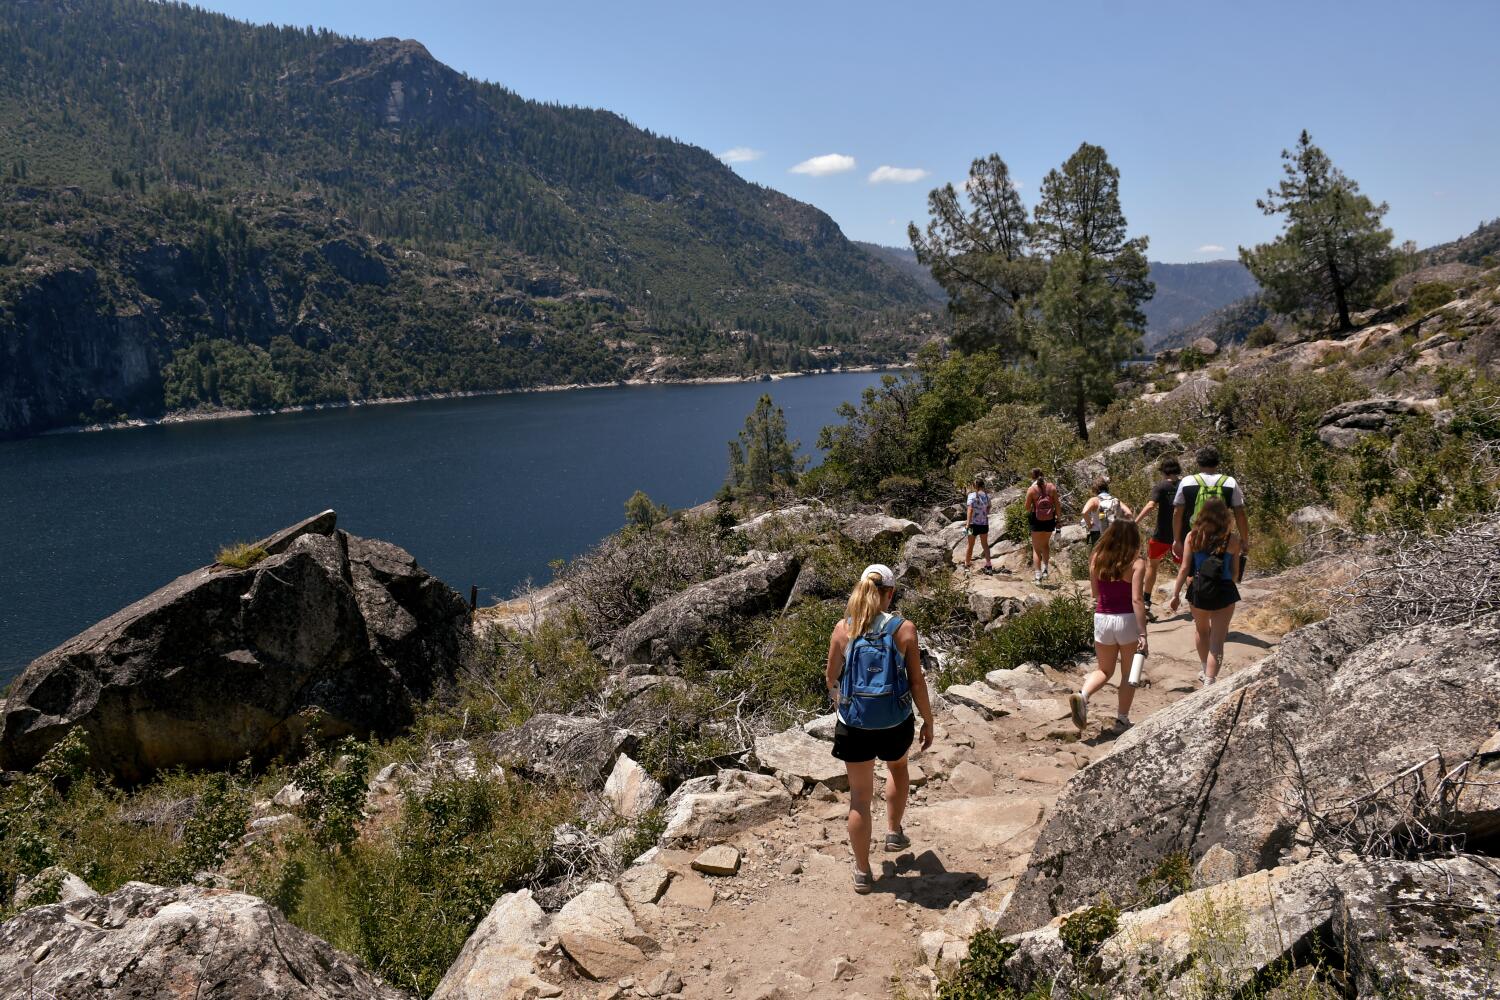 'Just wrong and shameful': Visitors slammed for trashing Yosemite National Park with toilet paper